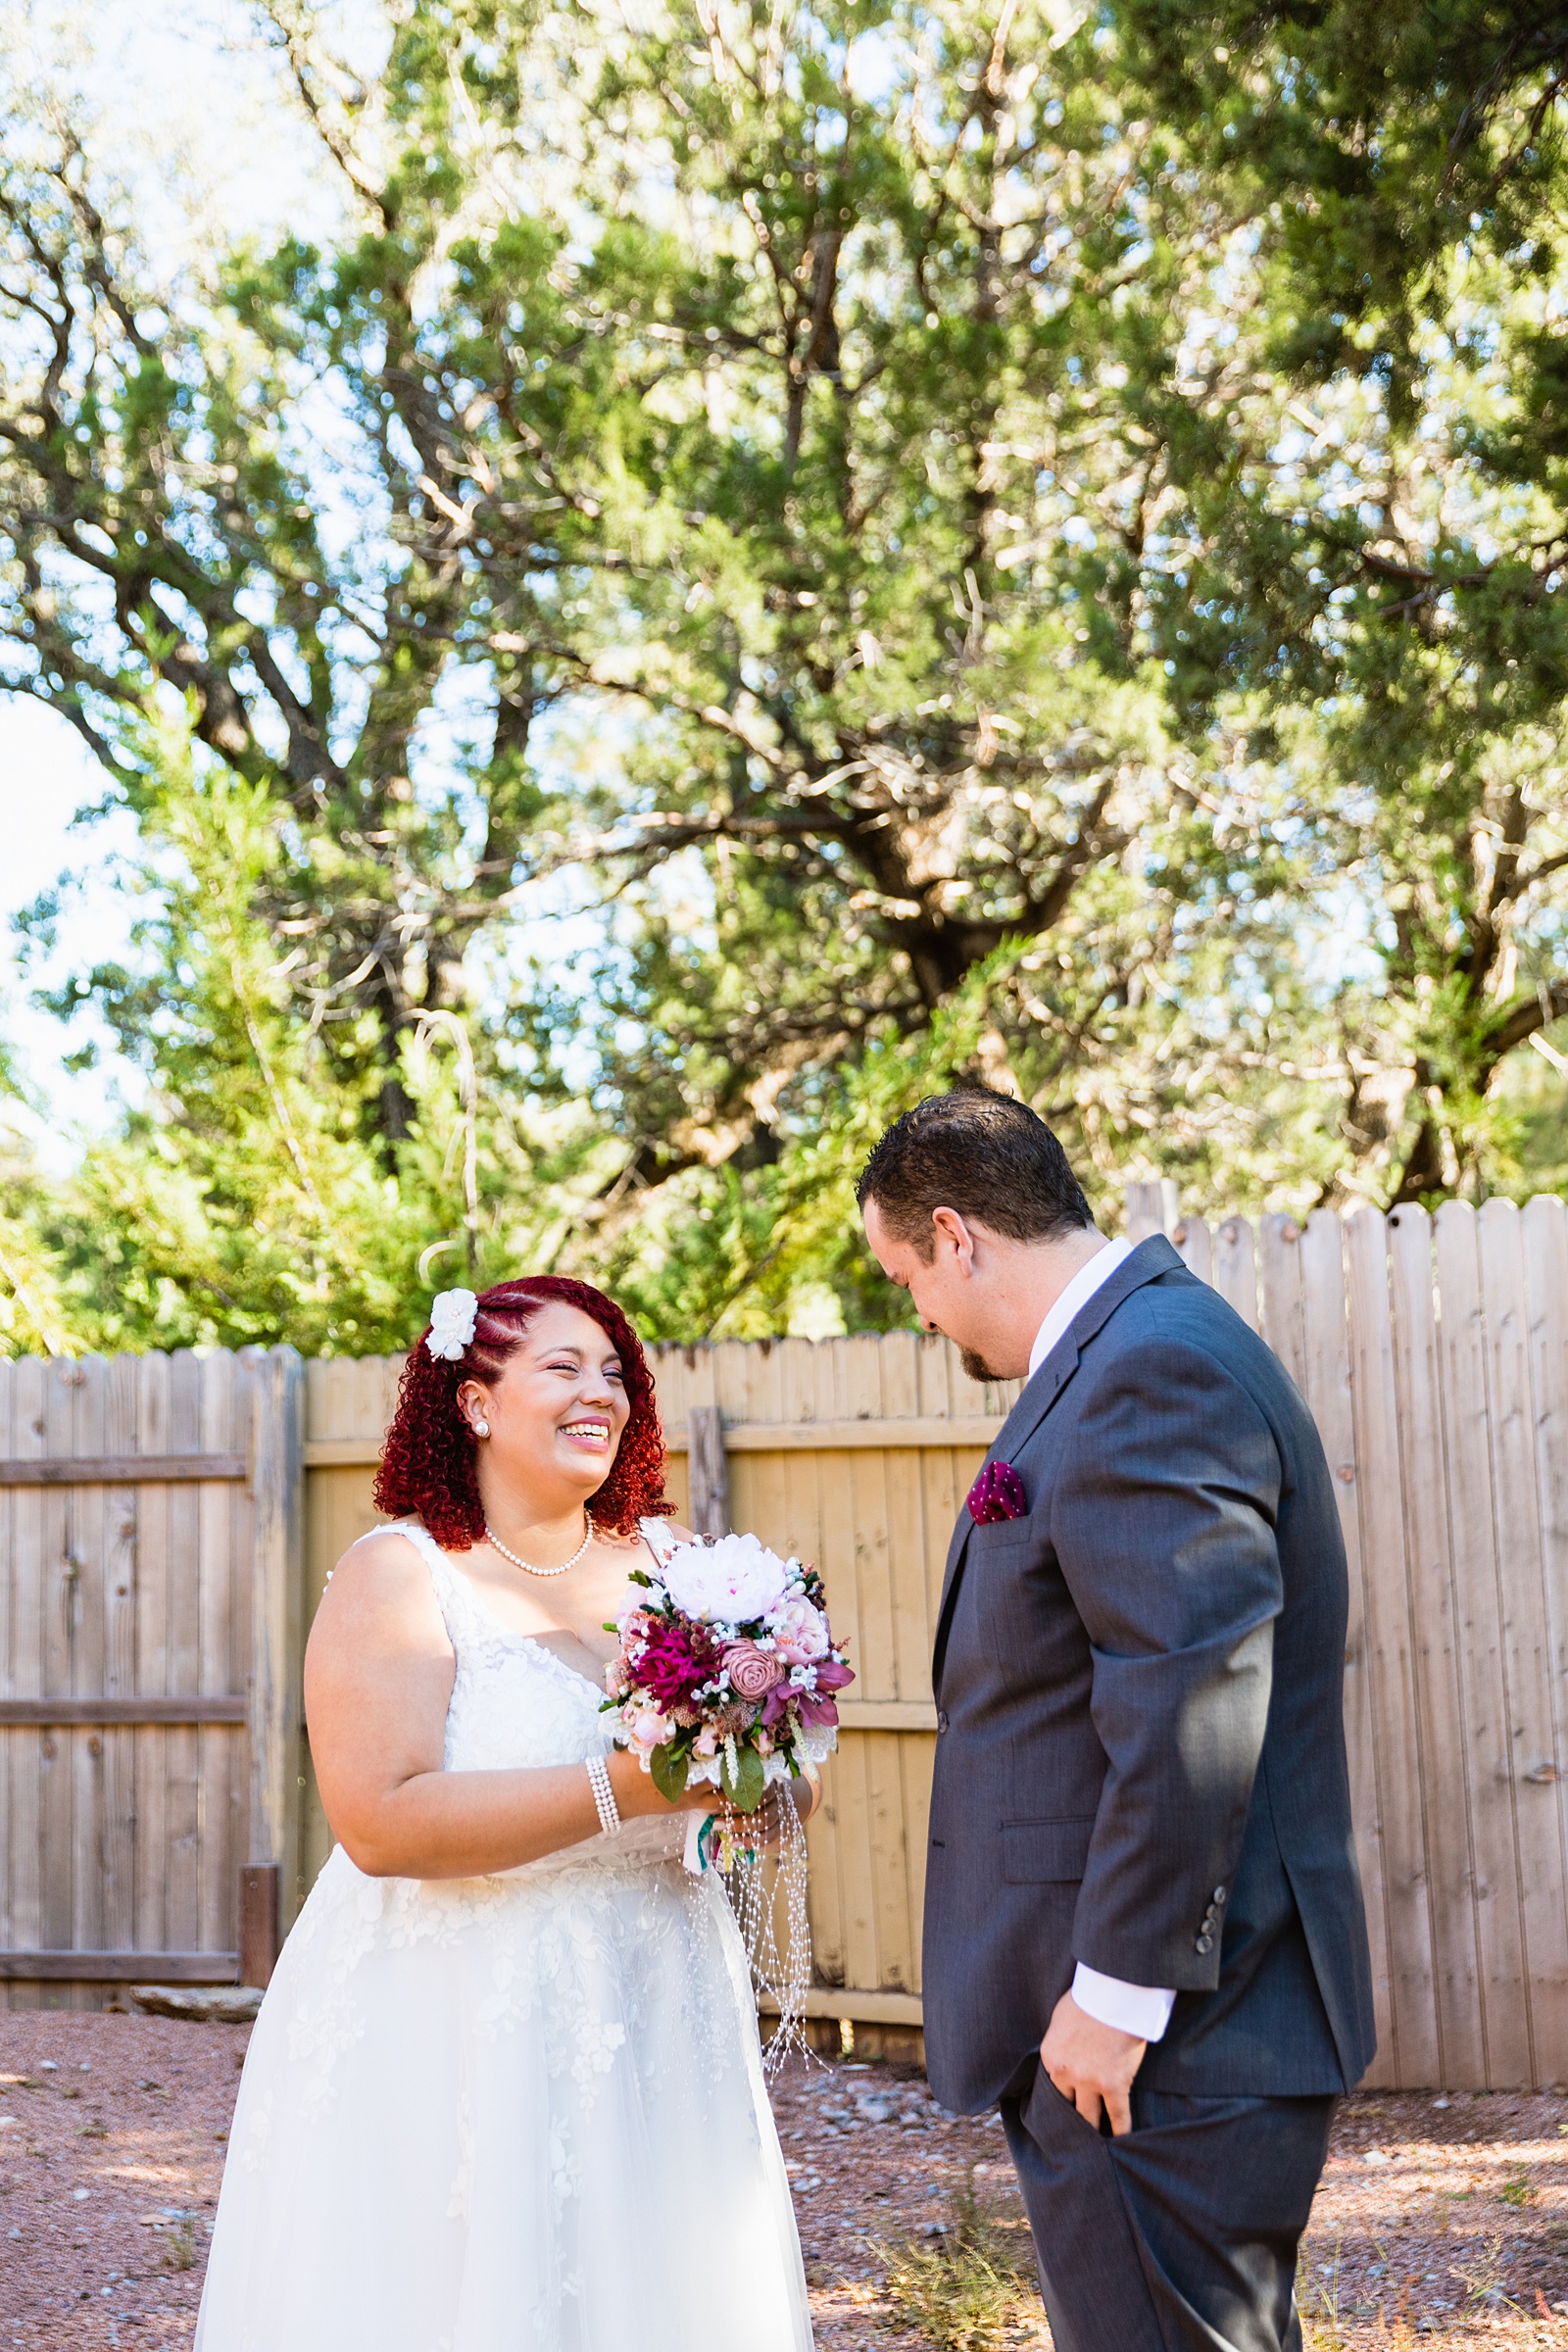 Adventurous couple's first look at Mogollon Rim by Arizona elopement photographer PMA Photography.